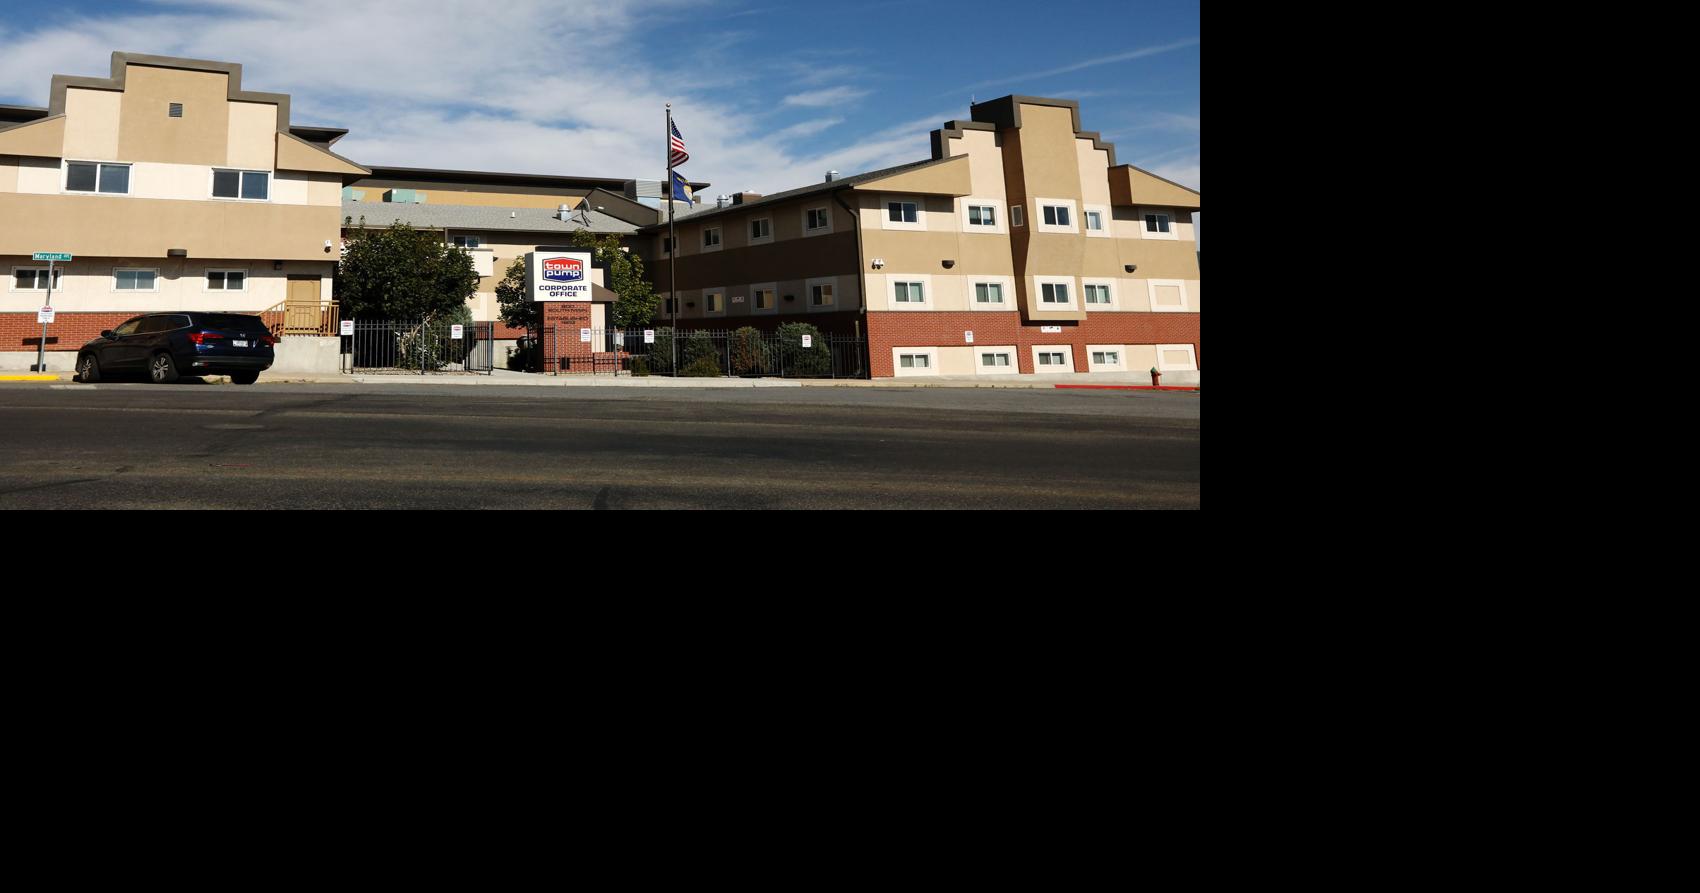 Town Pump matching $1 million for Montana food banks